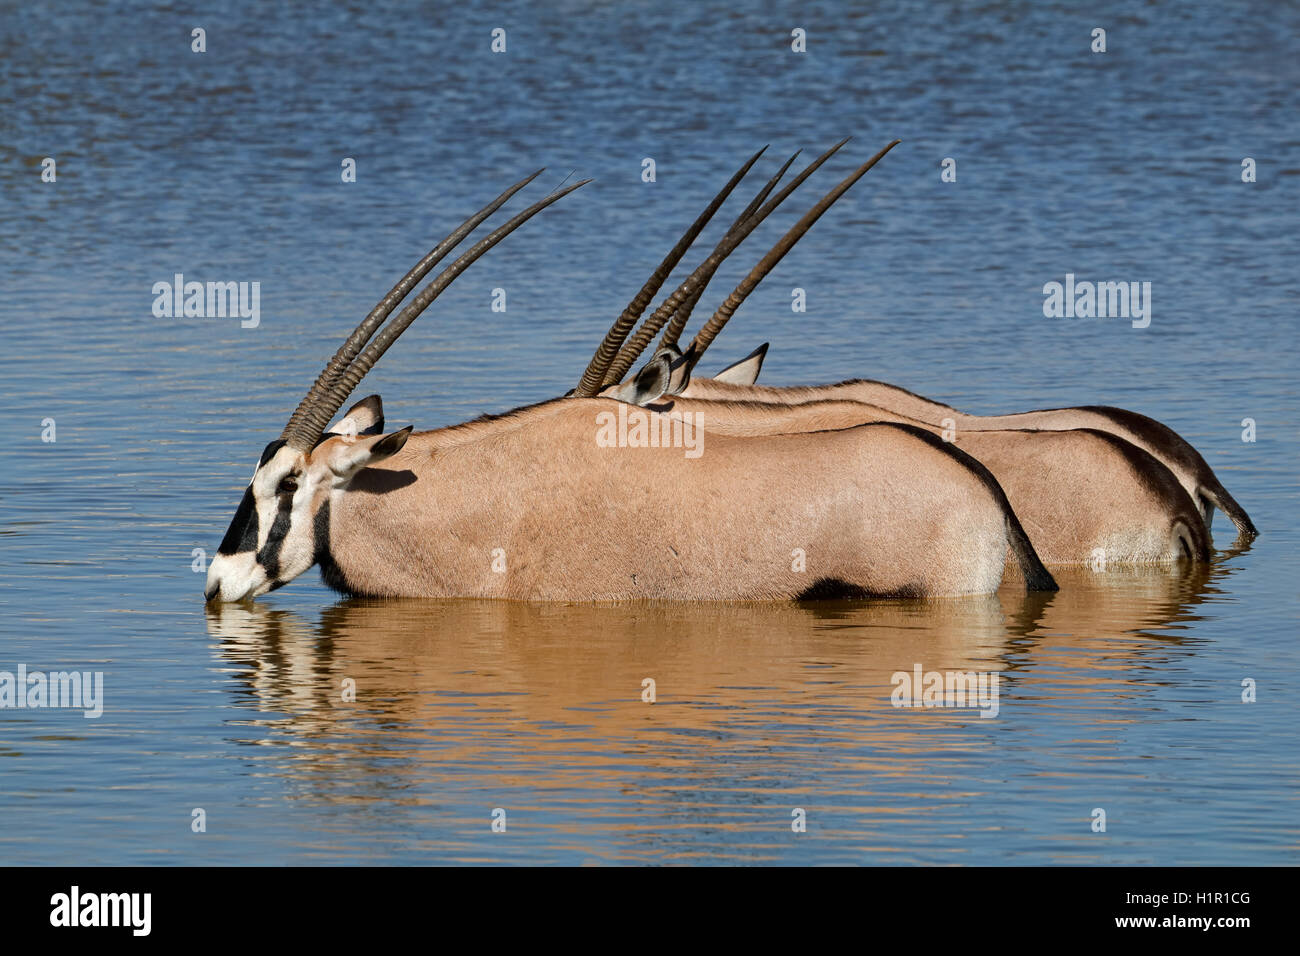 Oryx-Antilopen (Oryx Gazella) waten im Wasser, Etosha Nationalpark, Namibia Stockfoto